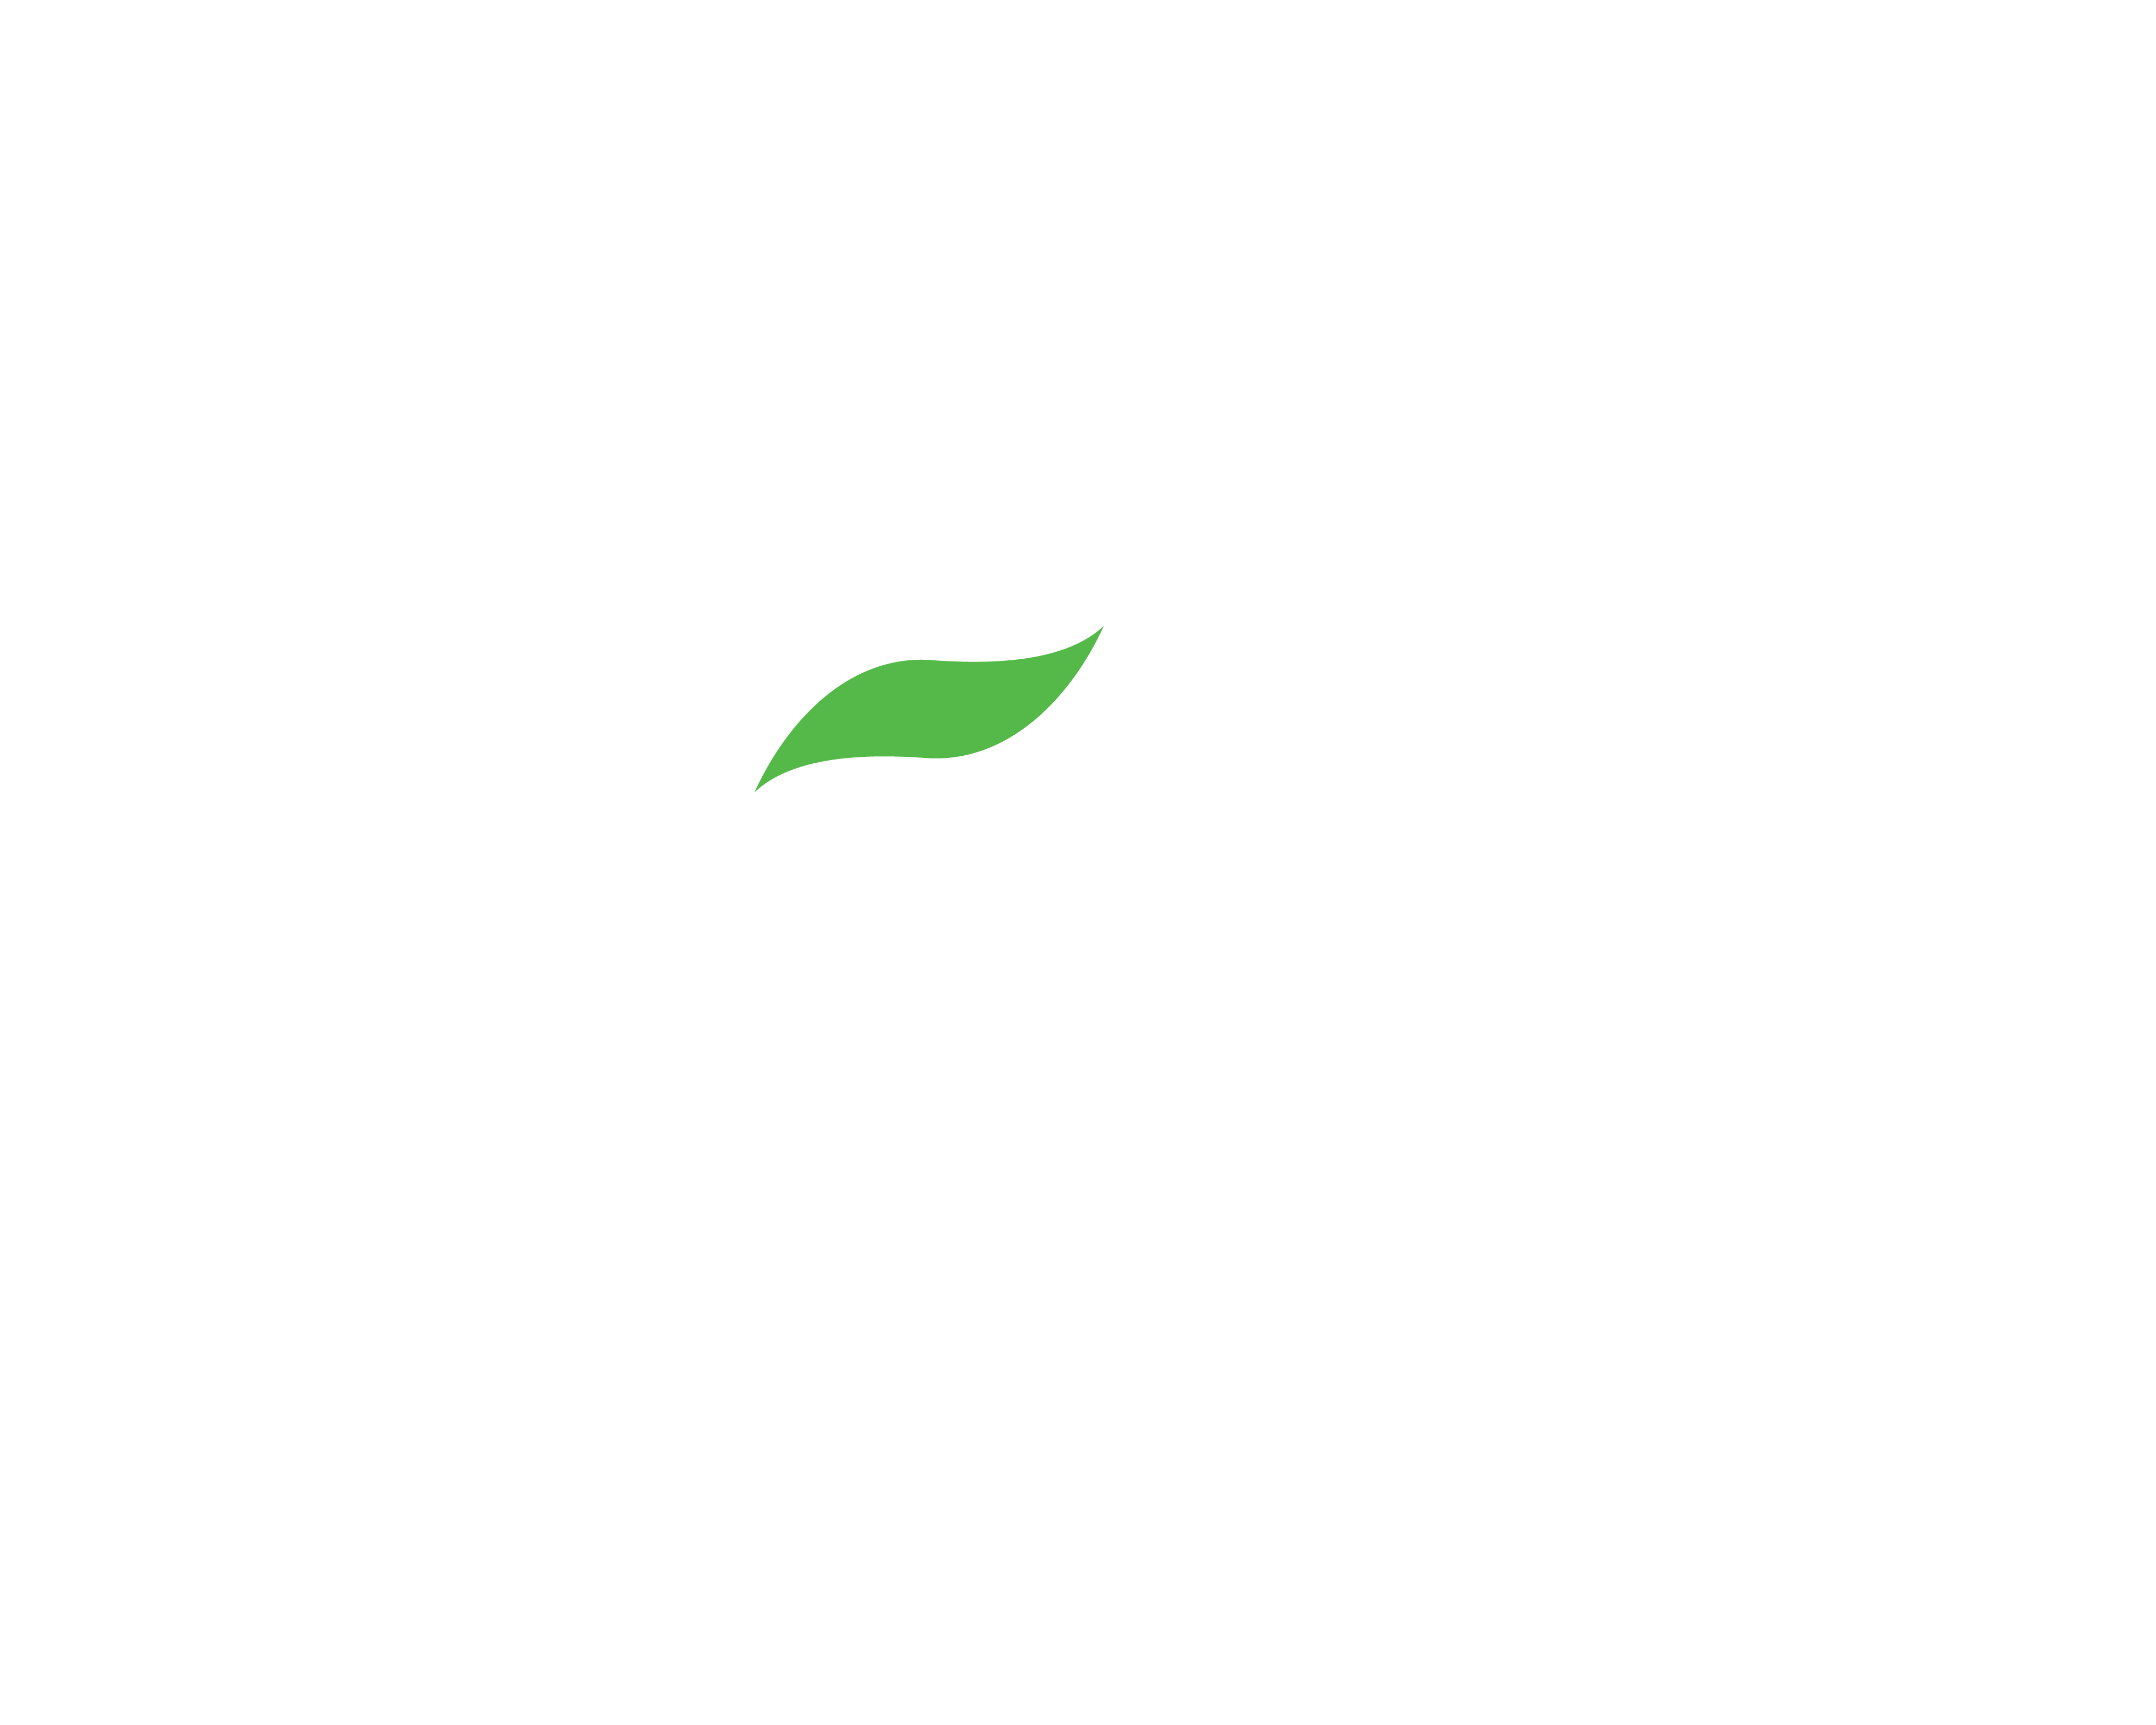 Logo Bama